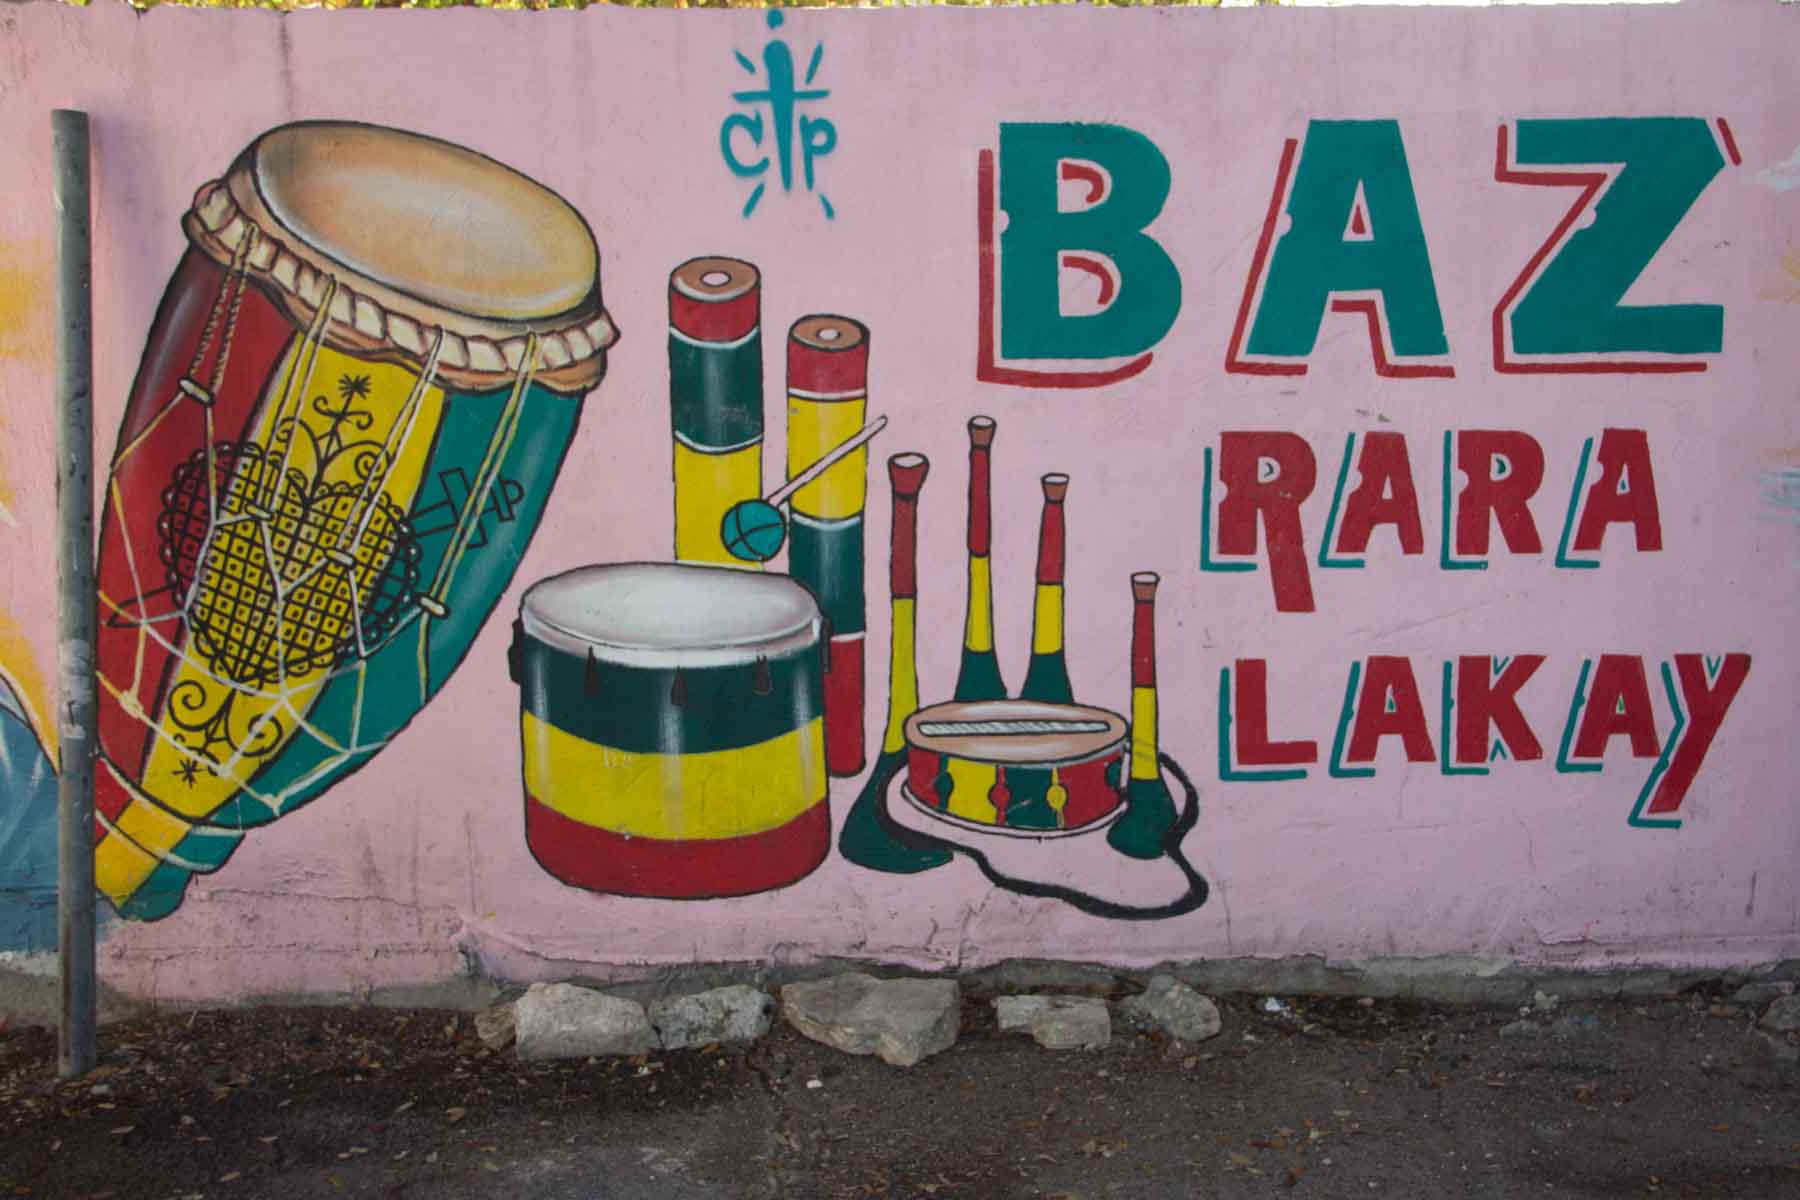 Mural featuring rara instruments of local band Rara Lakay